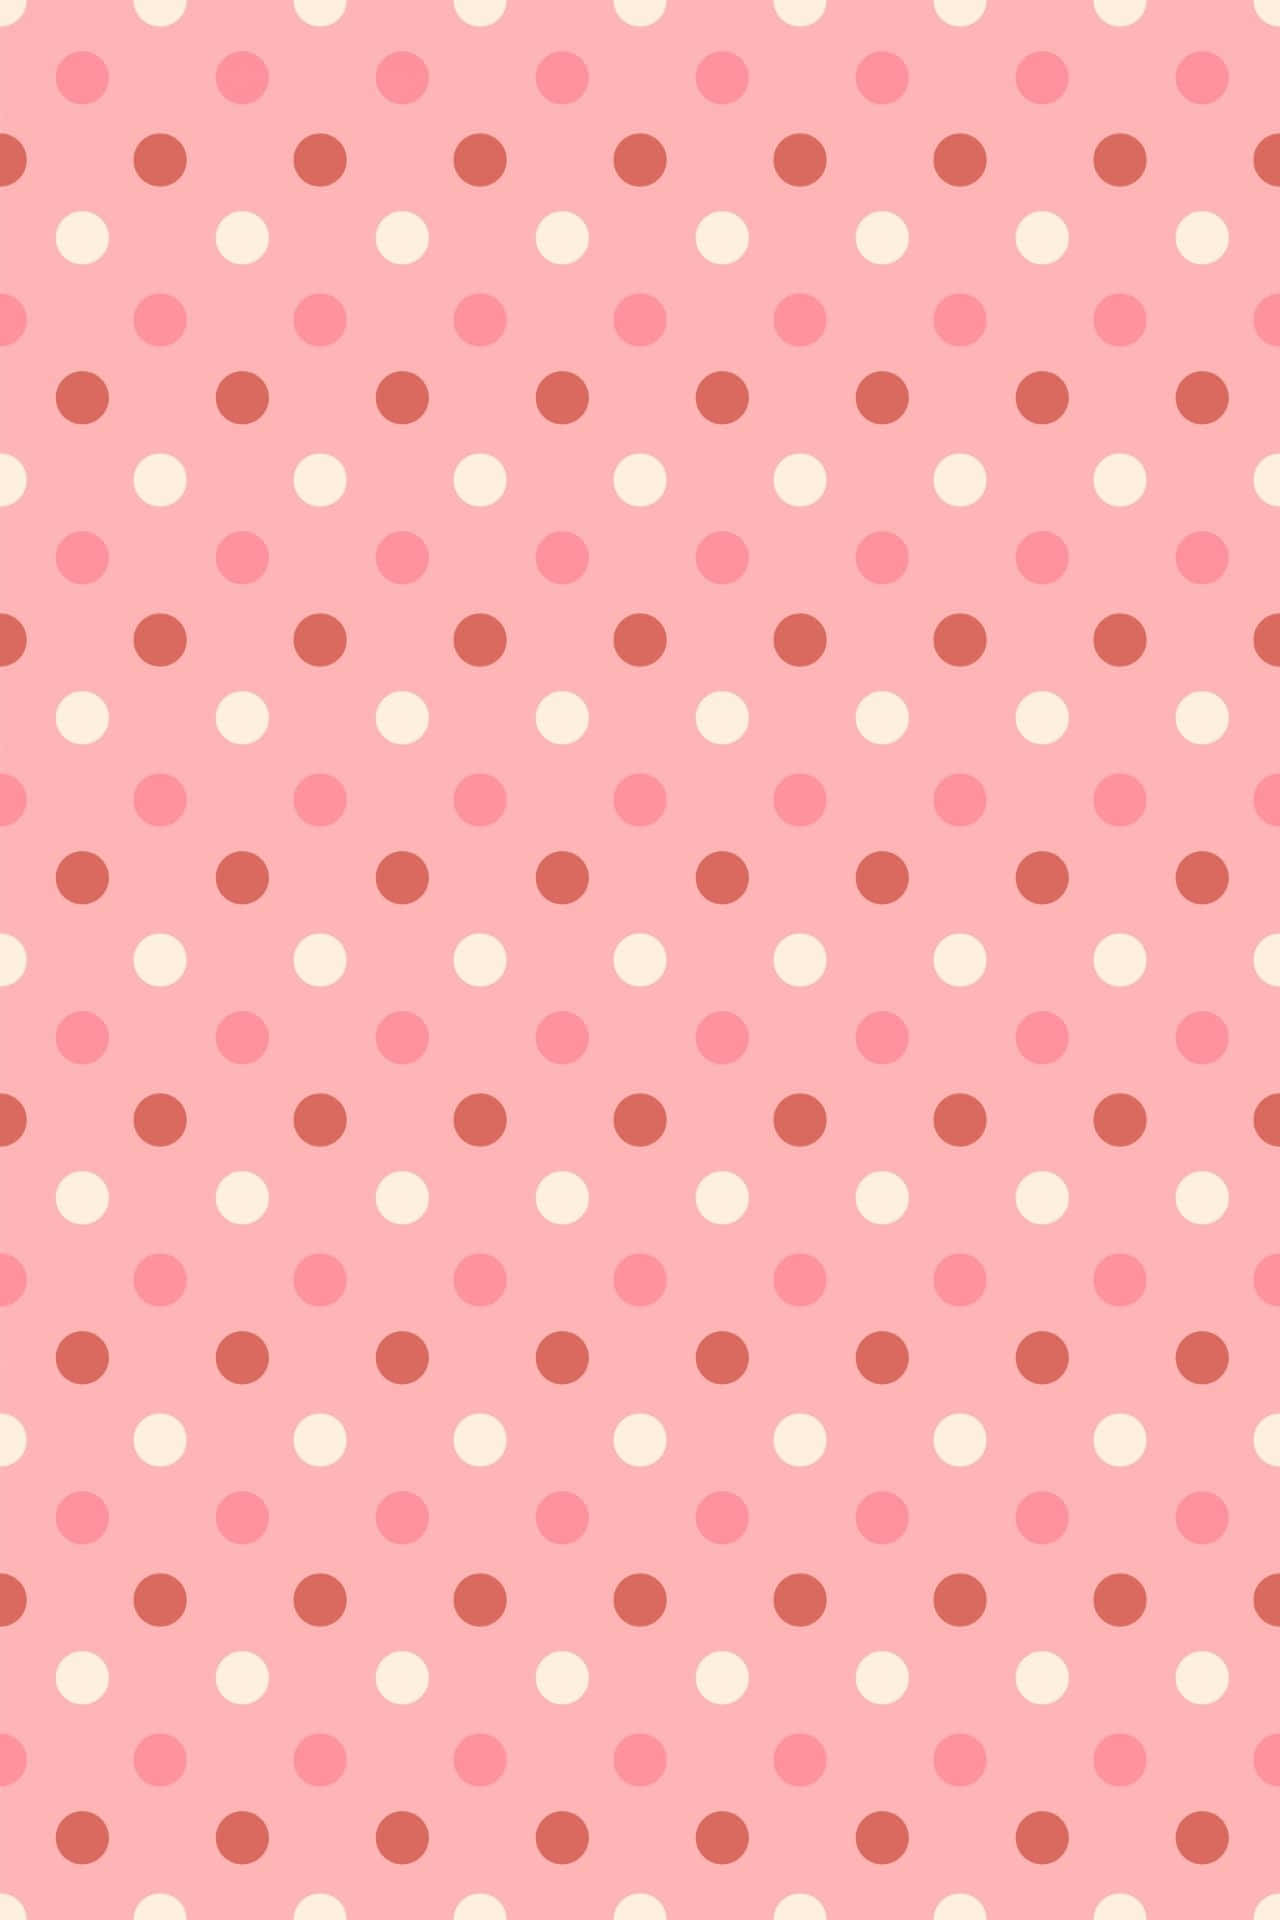 Pinkpolka Dot Mønstret Stof Af Sassy_sassy På Spoonflower - Tilpasset Stof Wallpaper